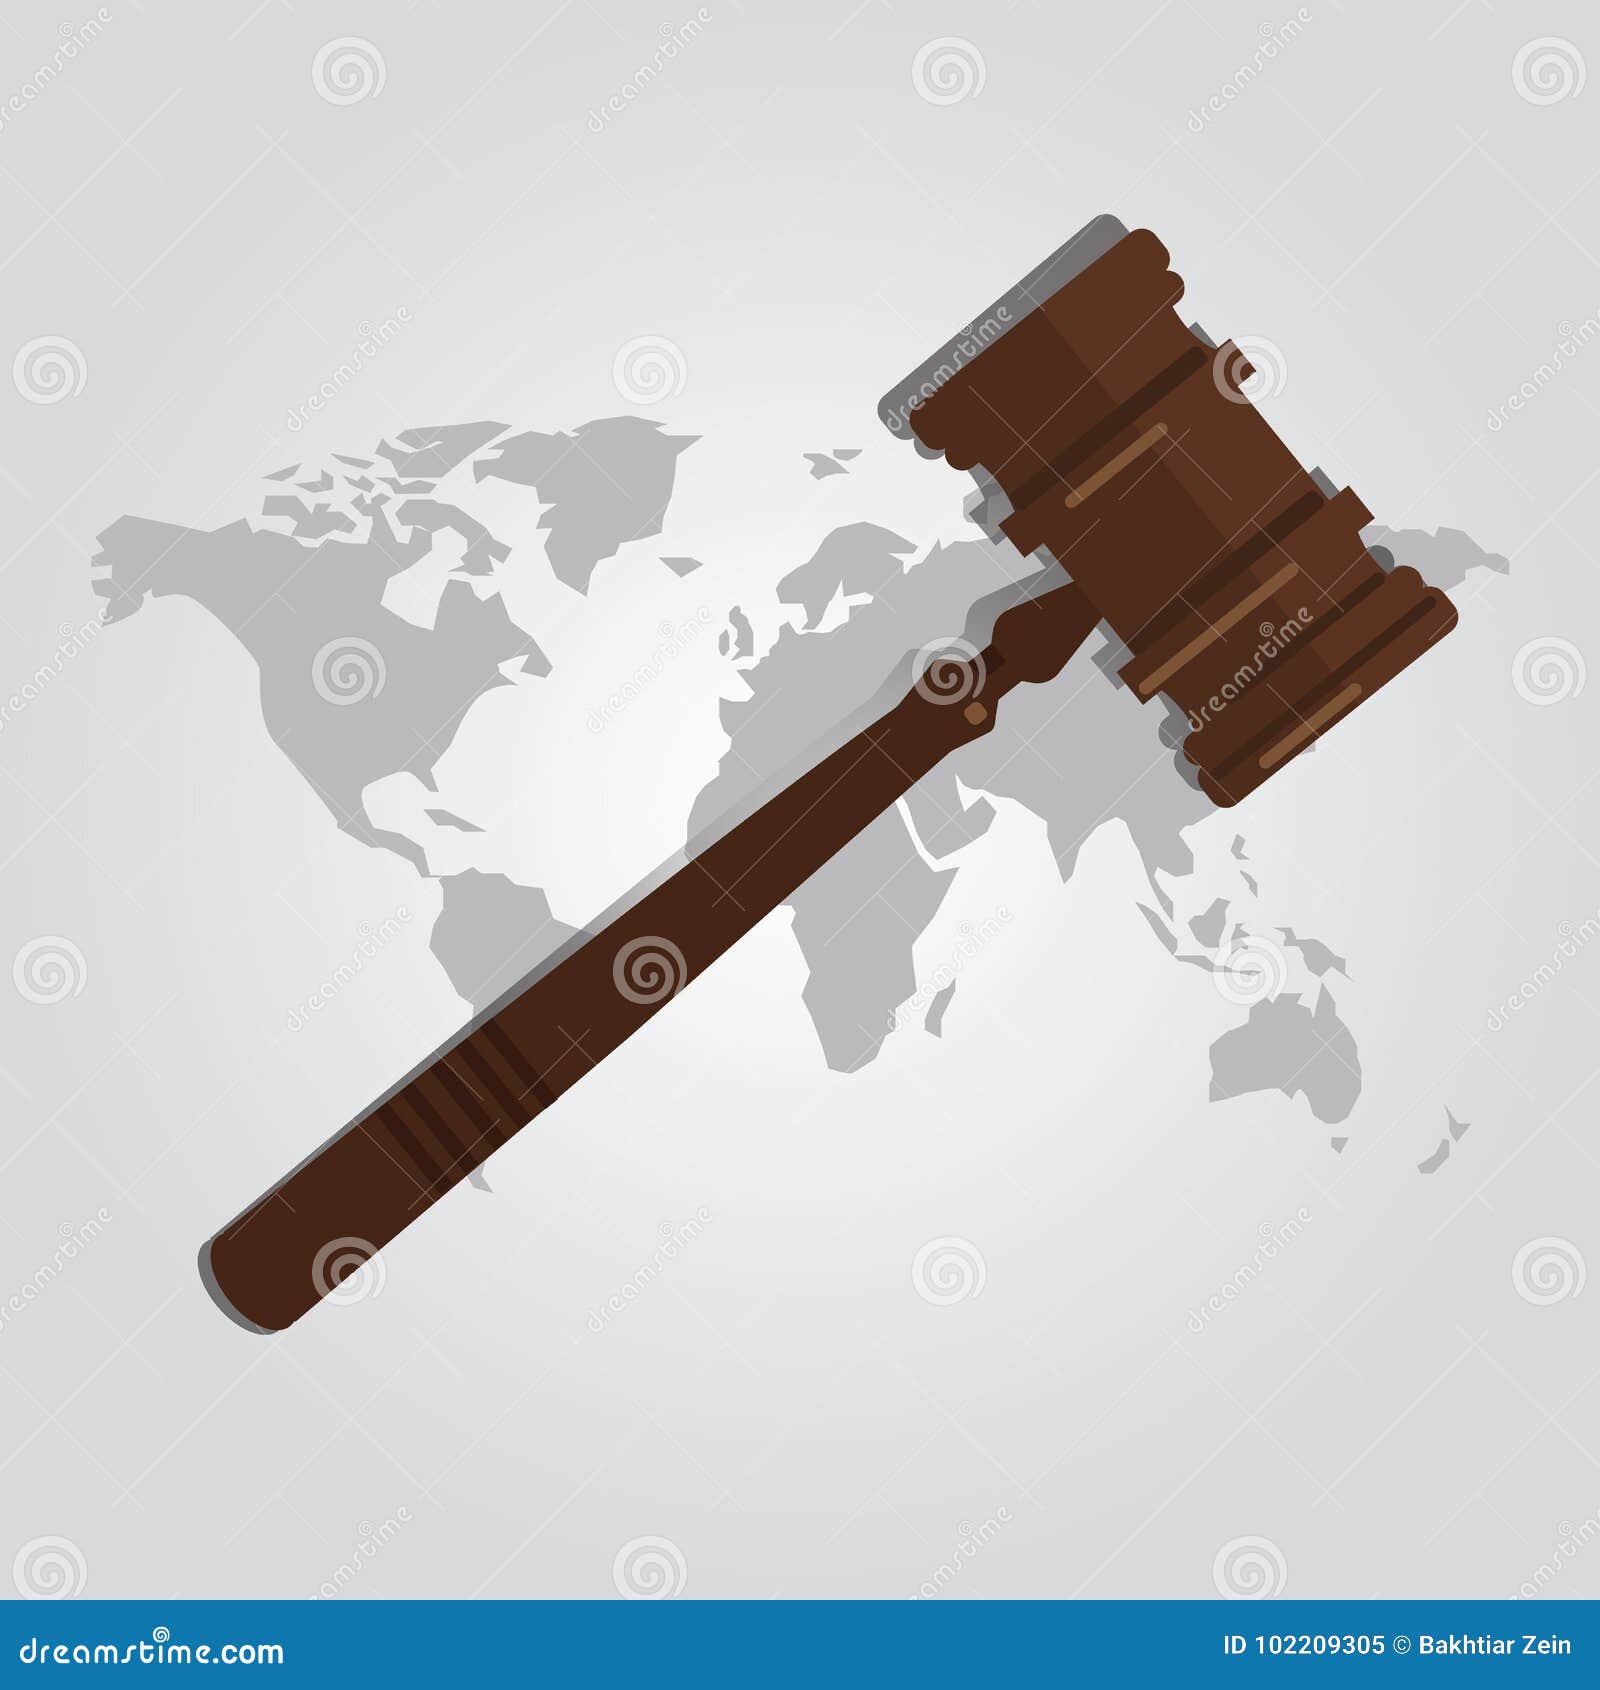 international law arbitration prosecution